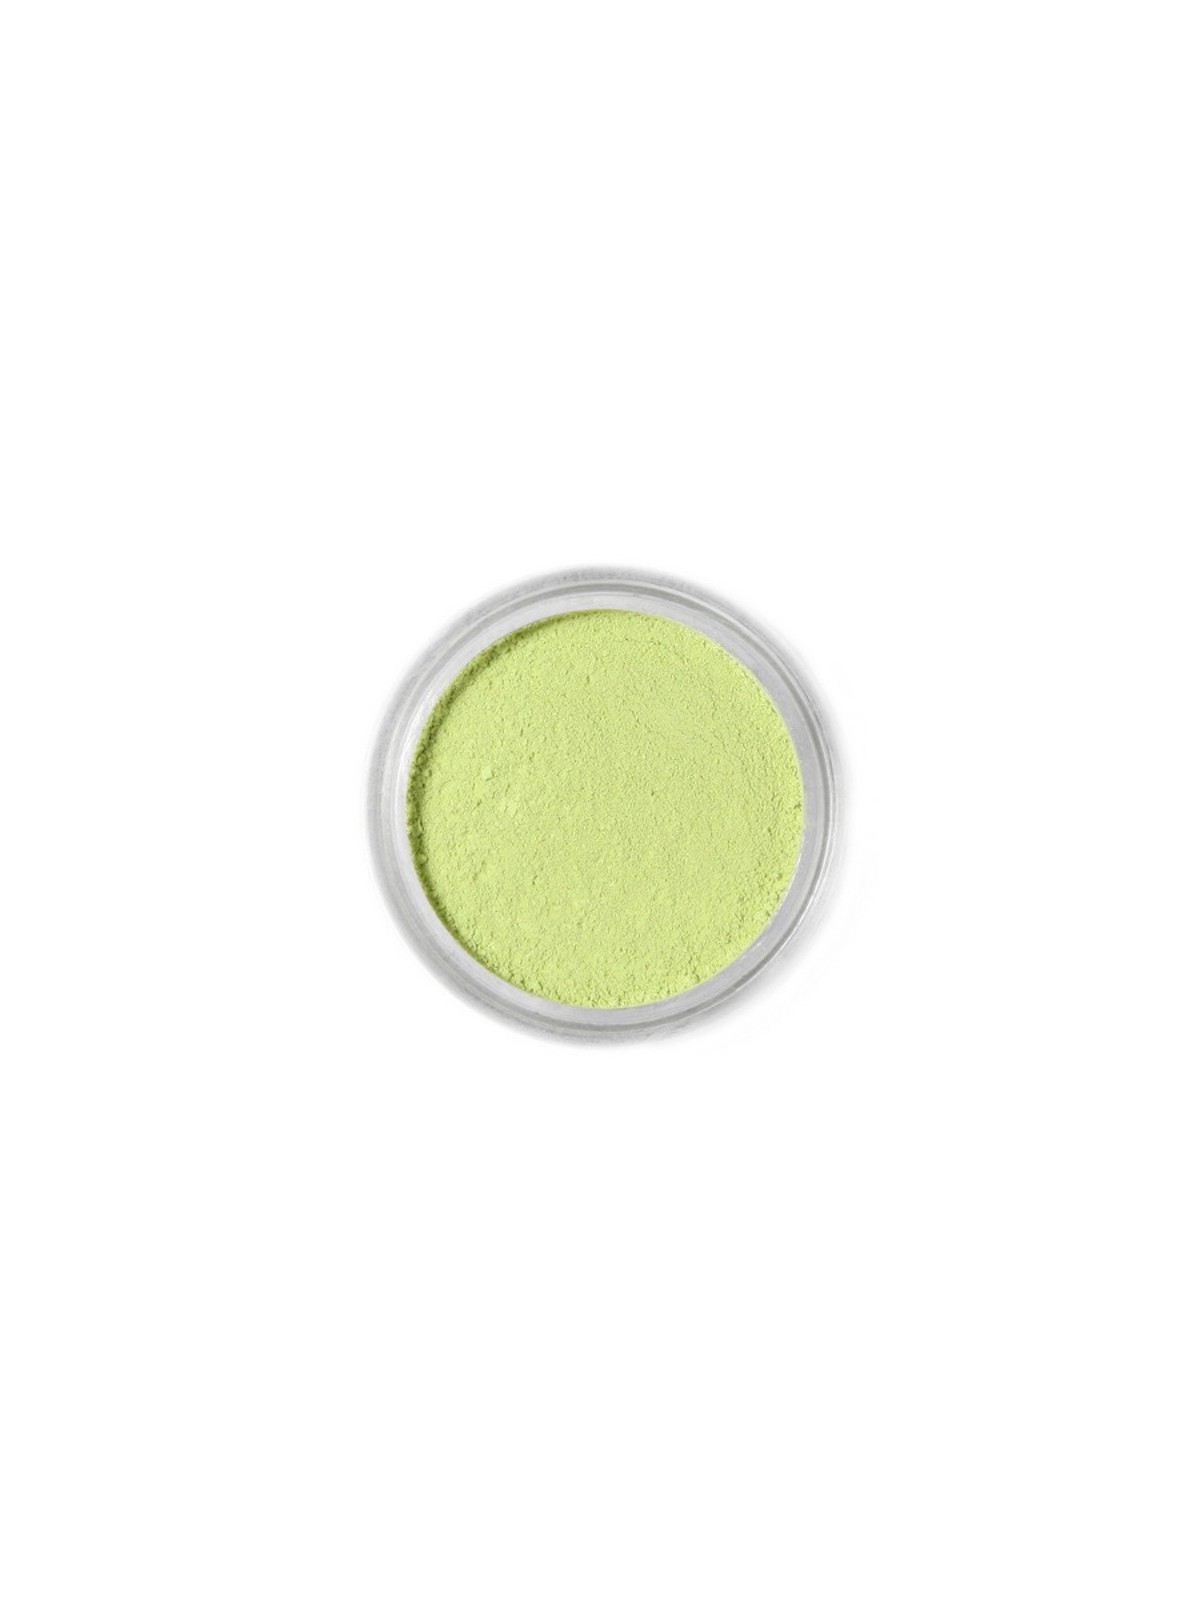 Jedlá prachová farba Fractal - Green Apple, Zöldalma (2,5 g)